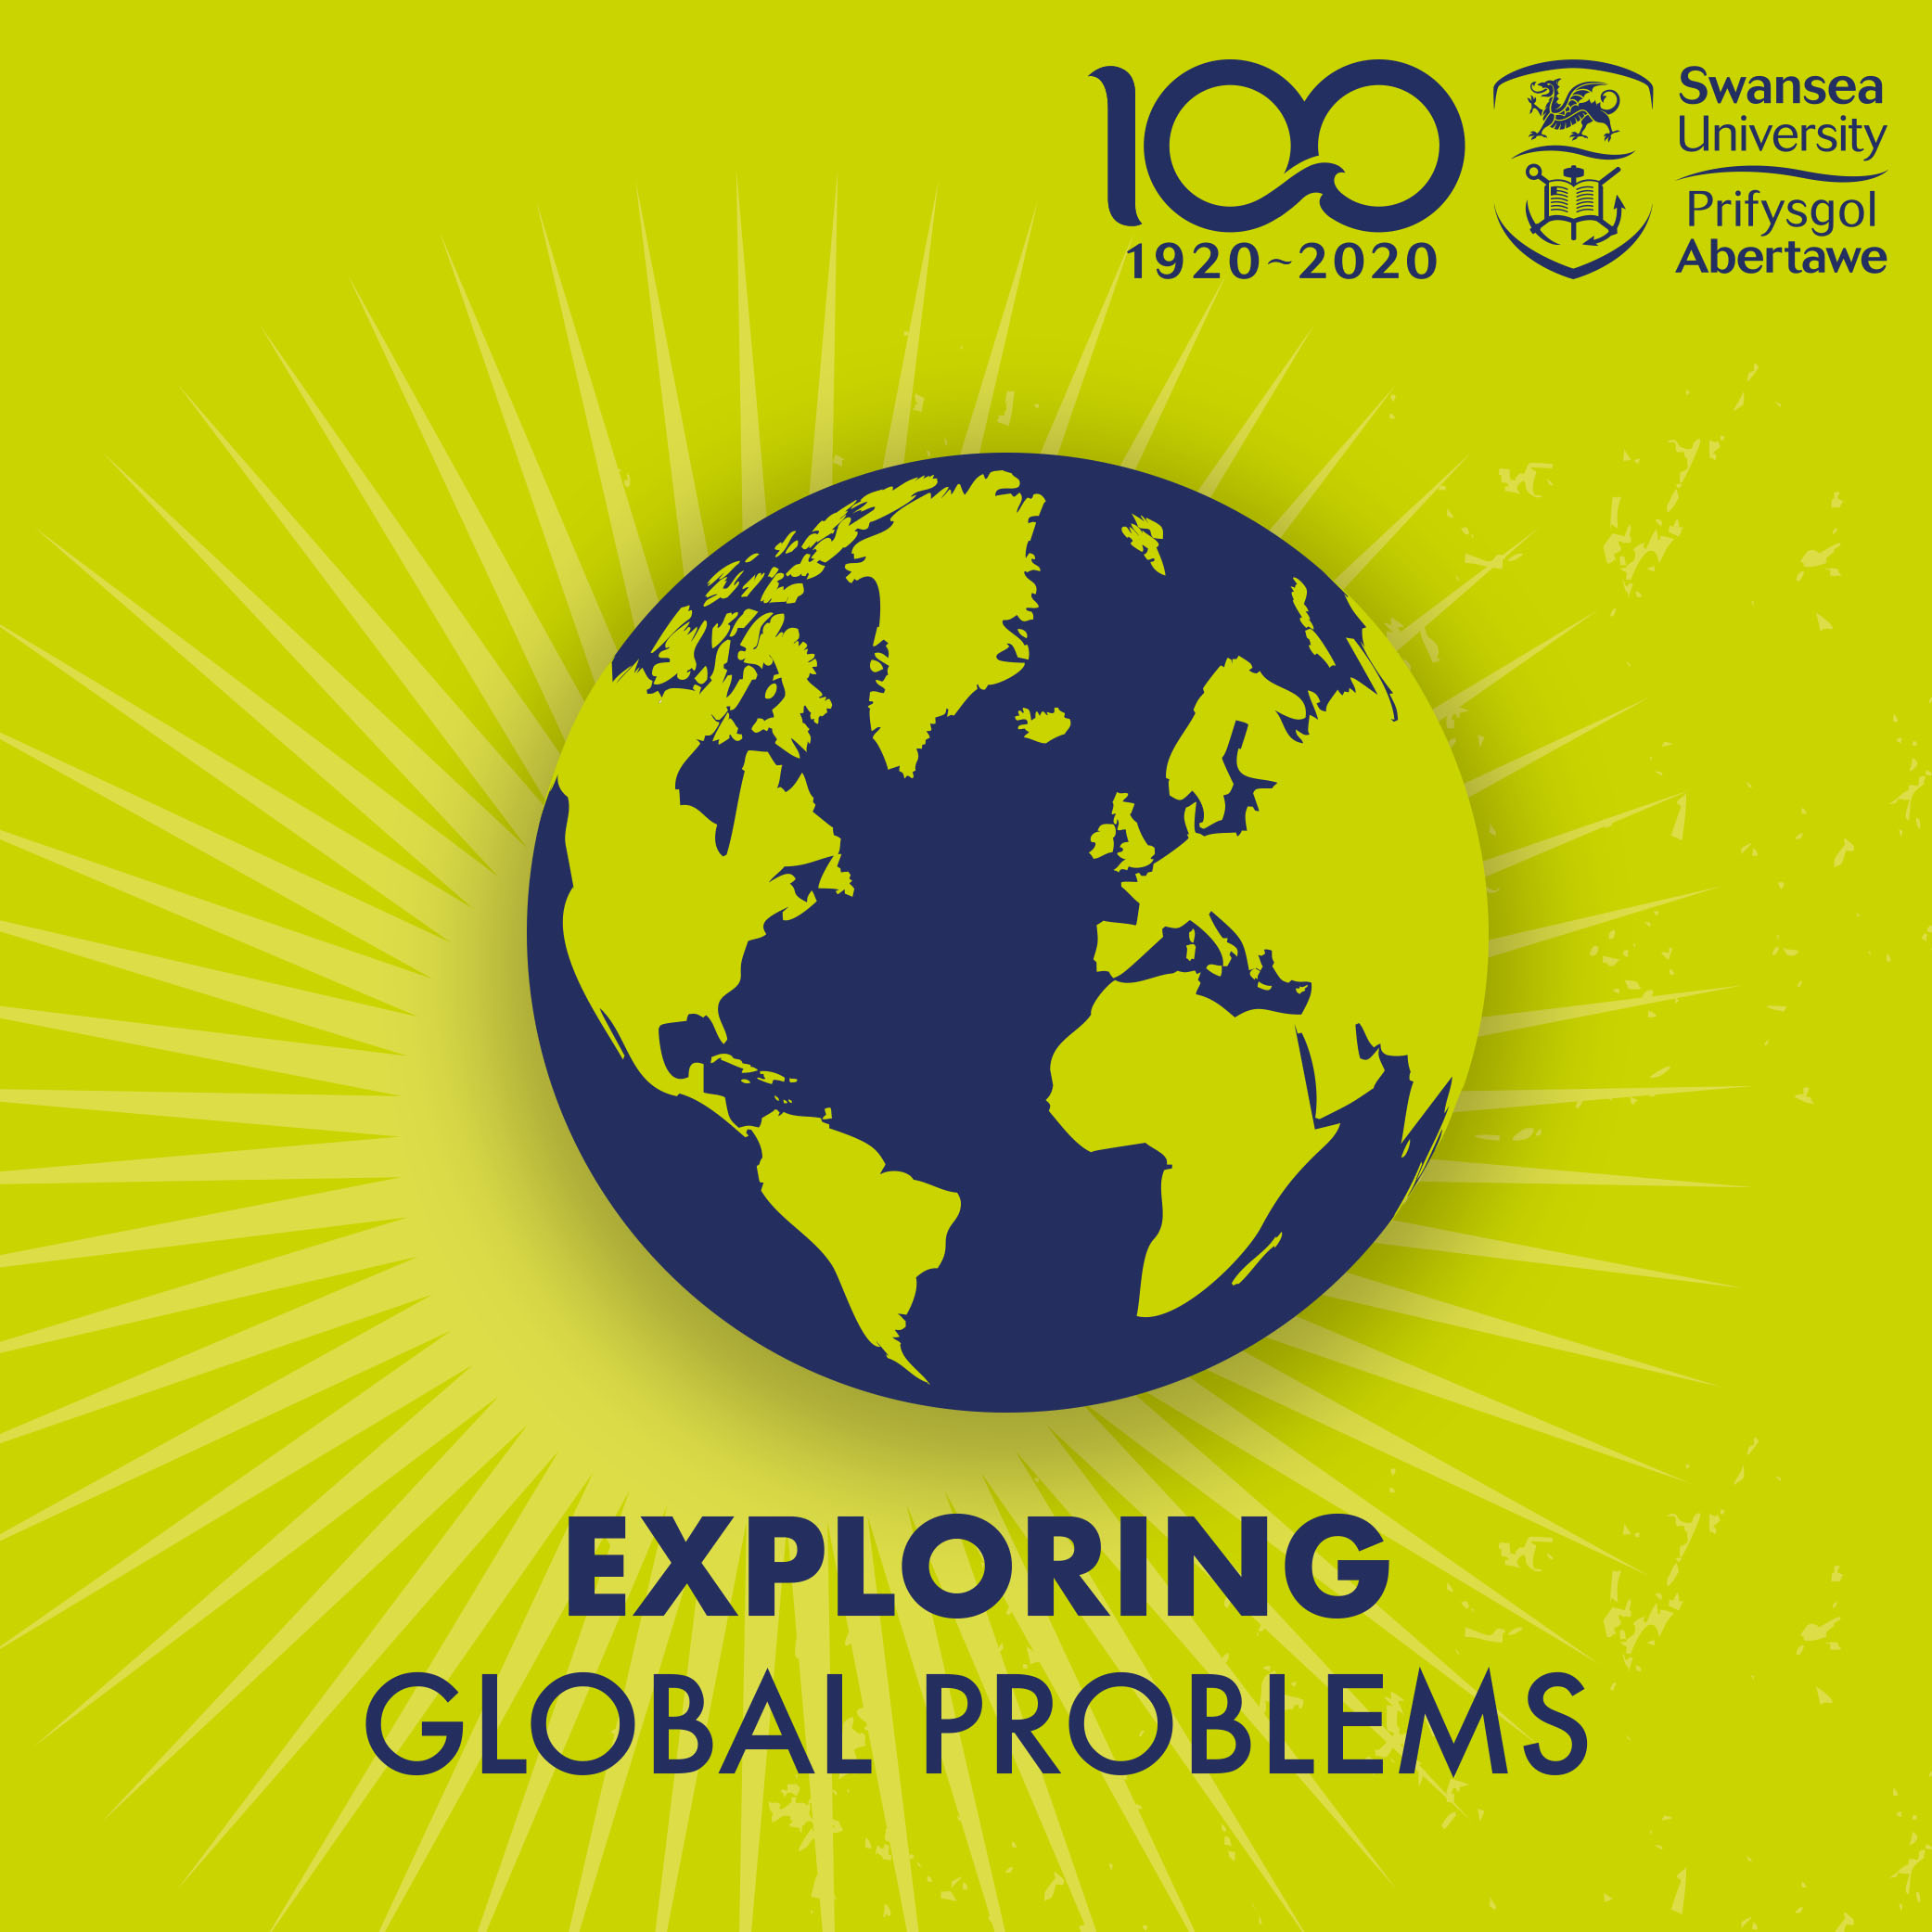 Swansea University’s ‘Exploring Global Problems’ podcast series